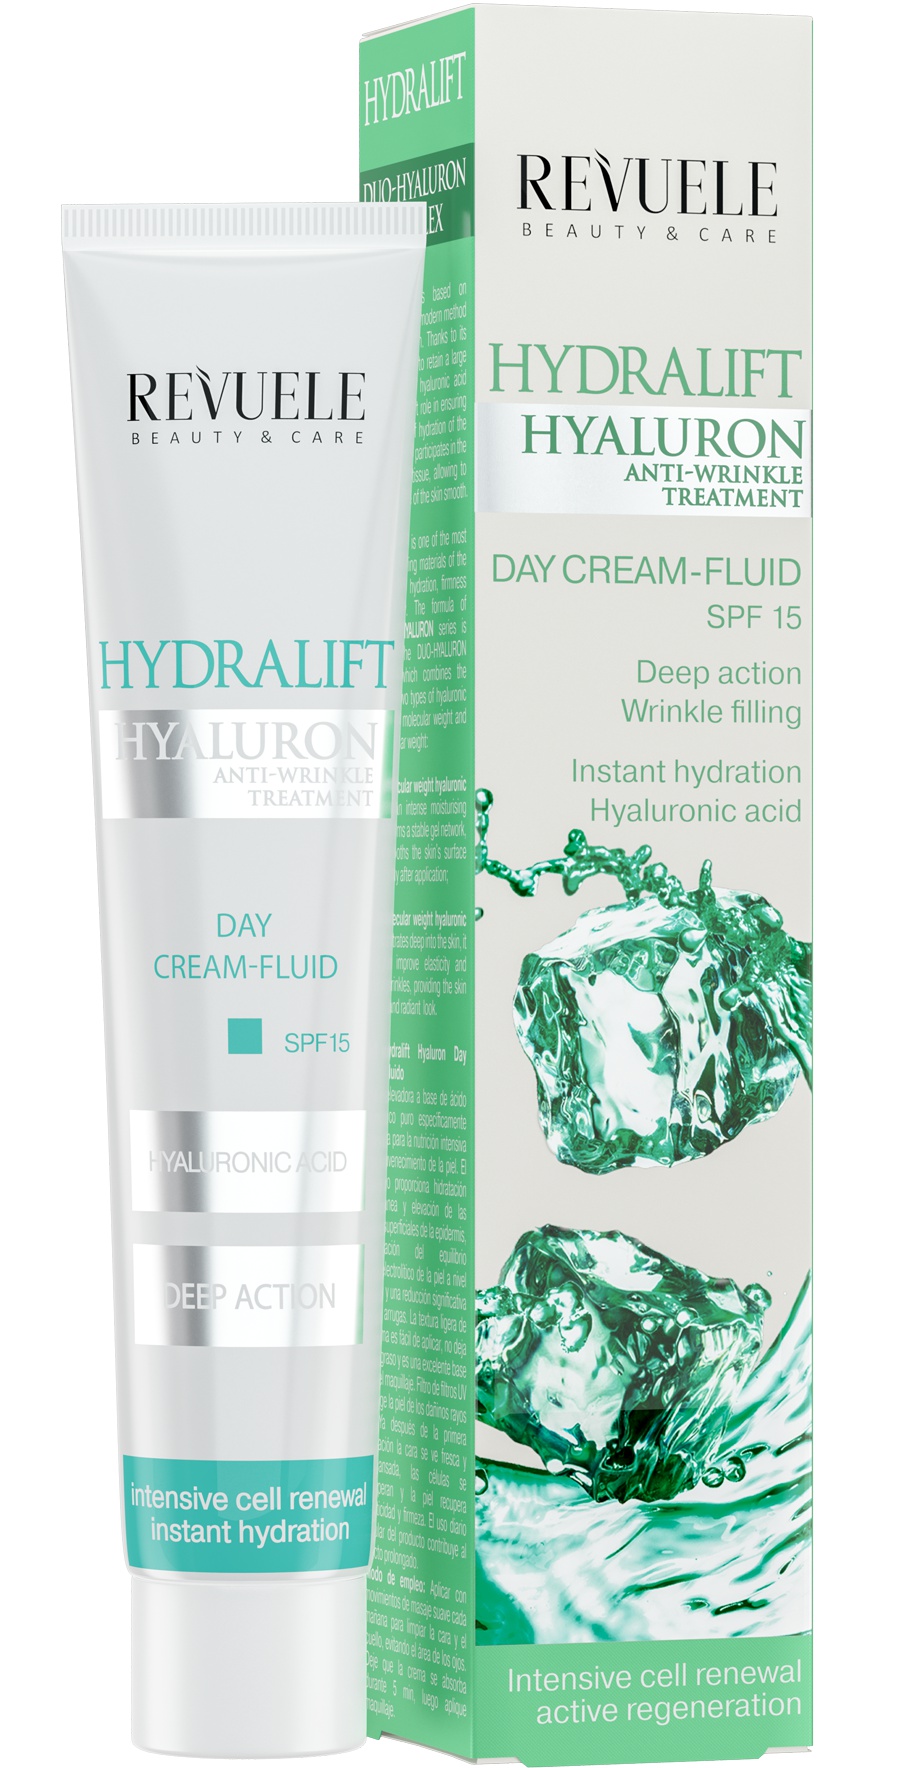 Revuele Hydralift Hyaluron Day Cream-Fluid SPF 15